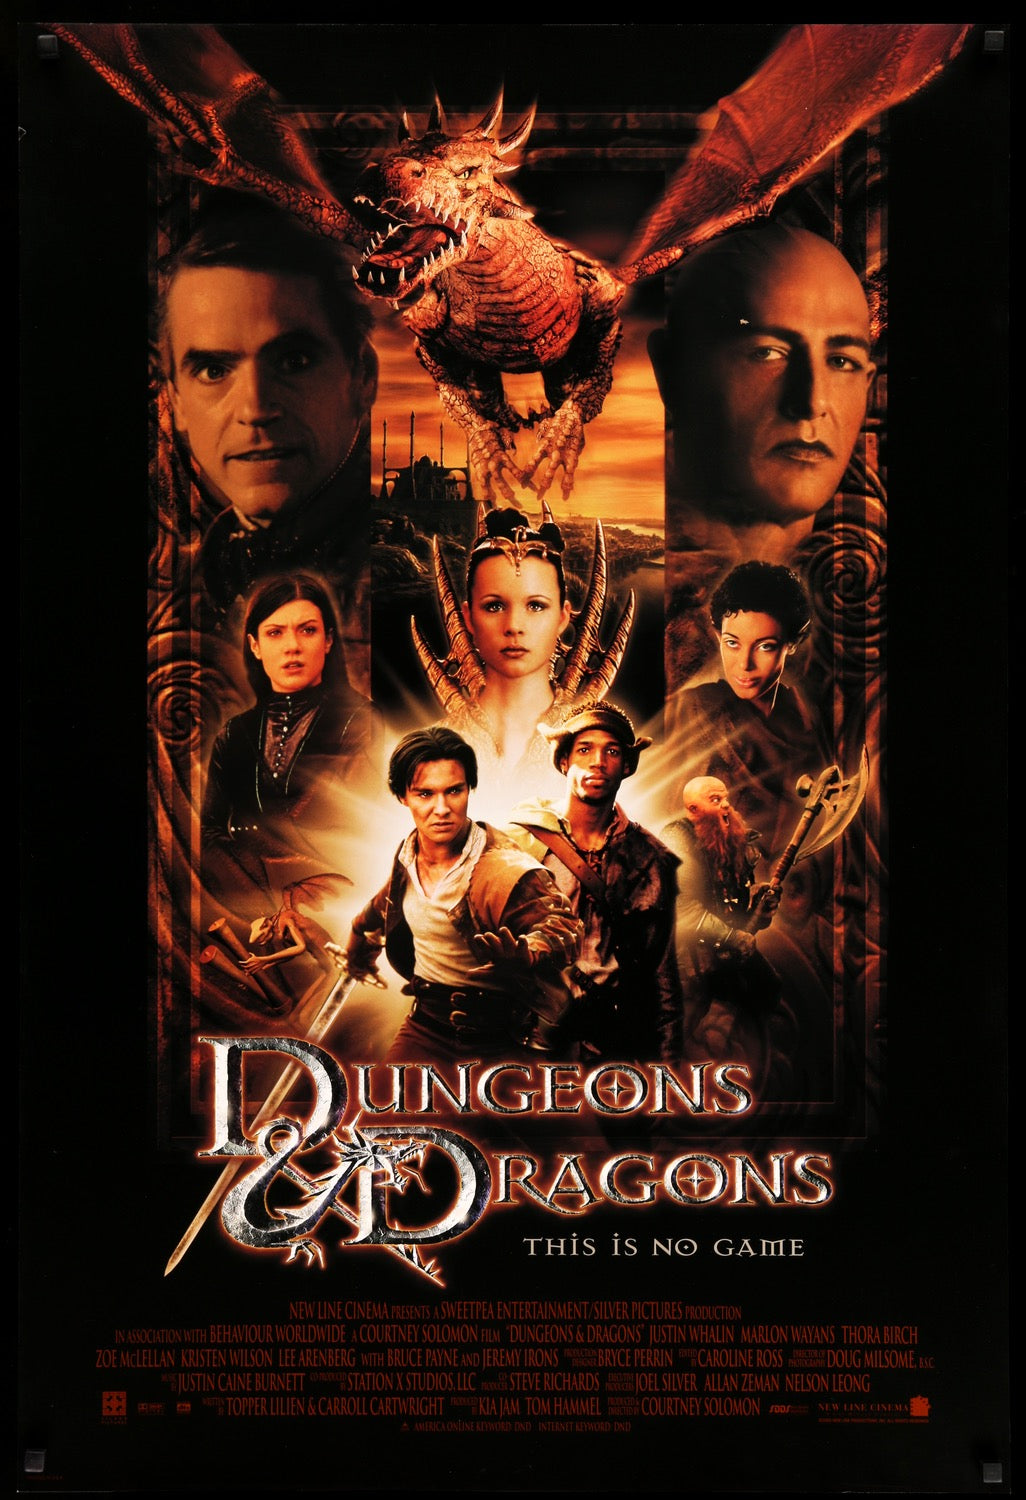 Dungeons and Dragons (2000) original movie poster for sale at Original Film Art